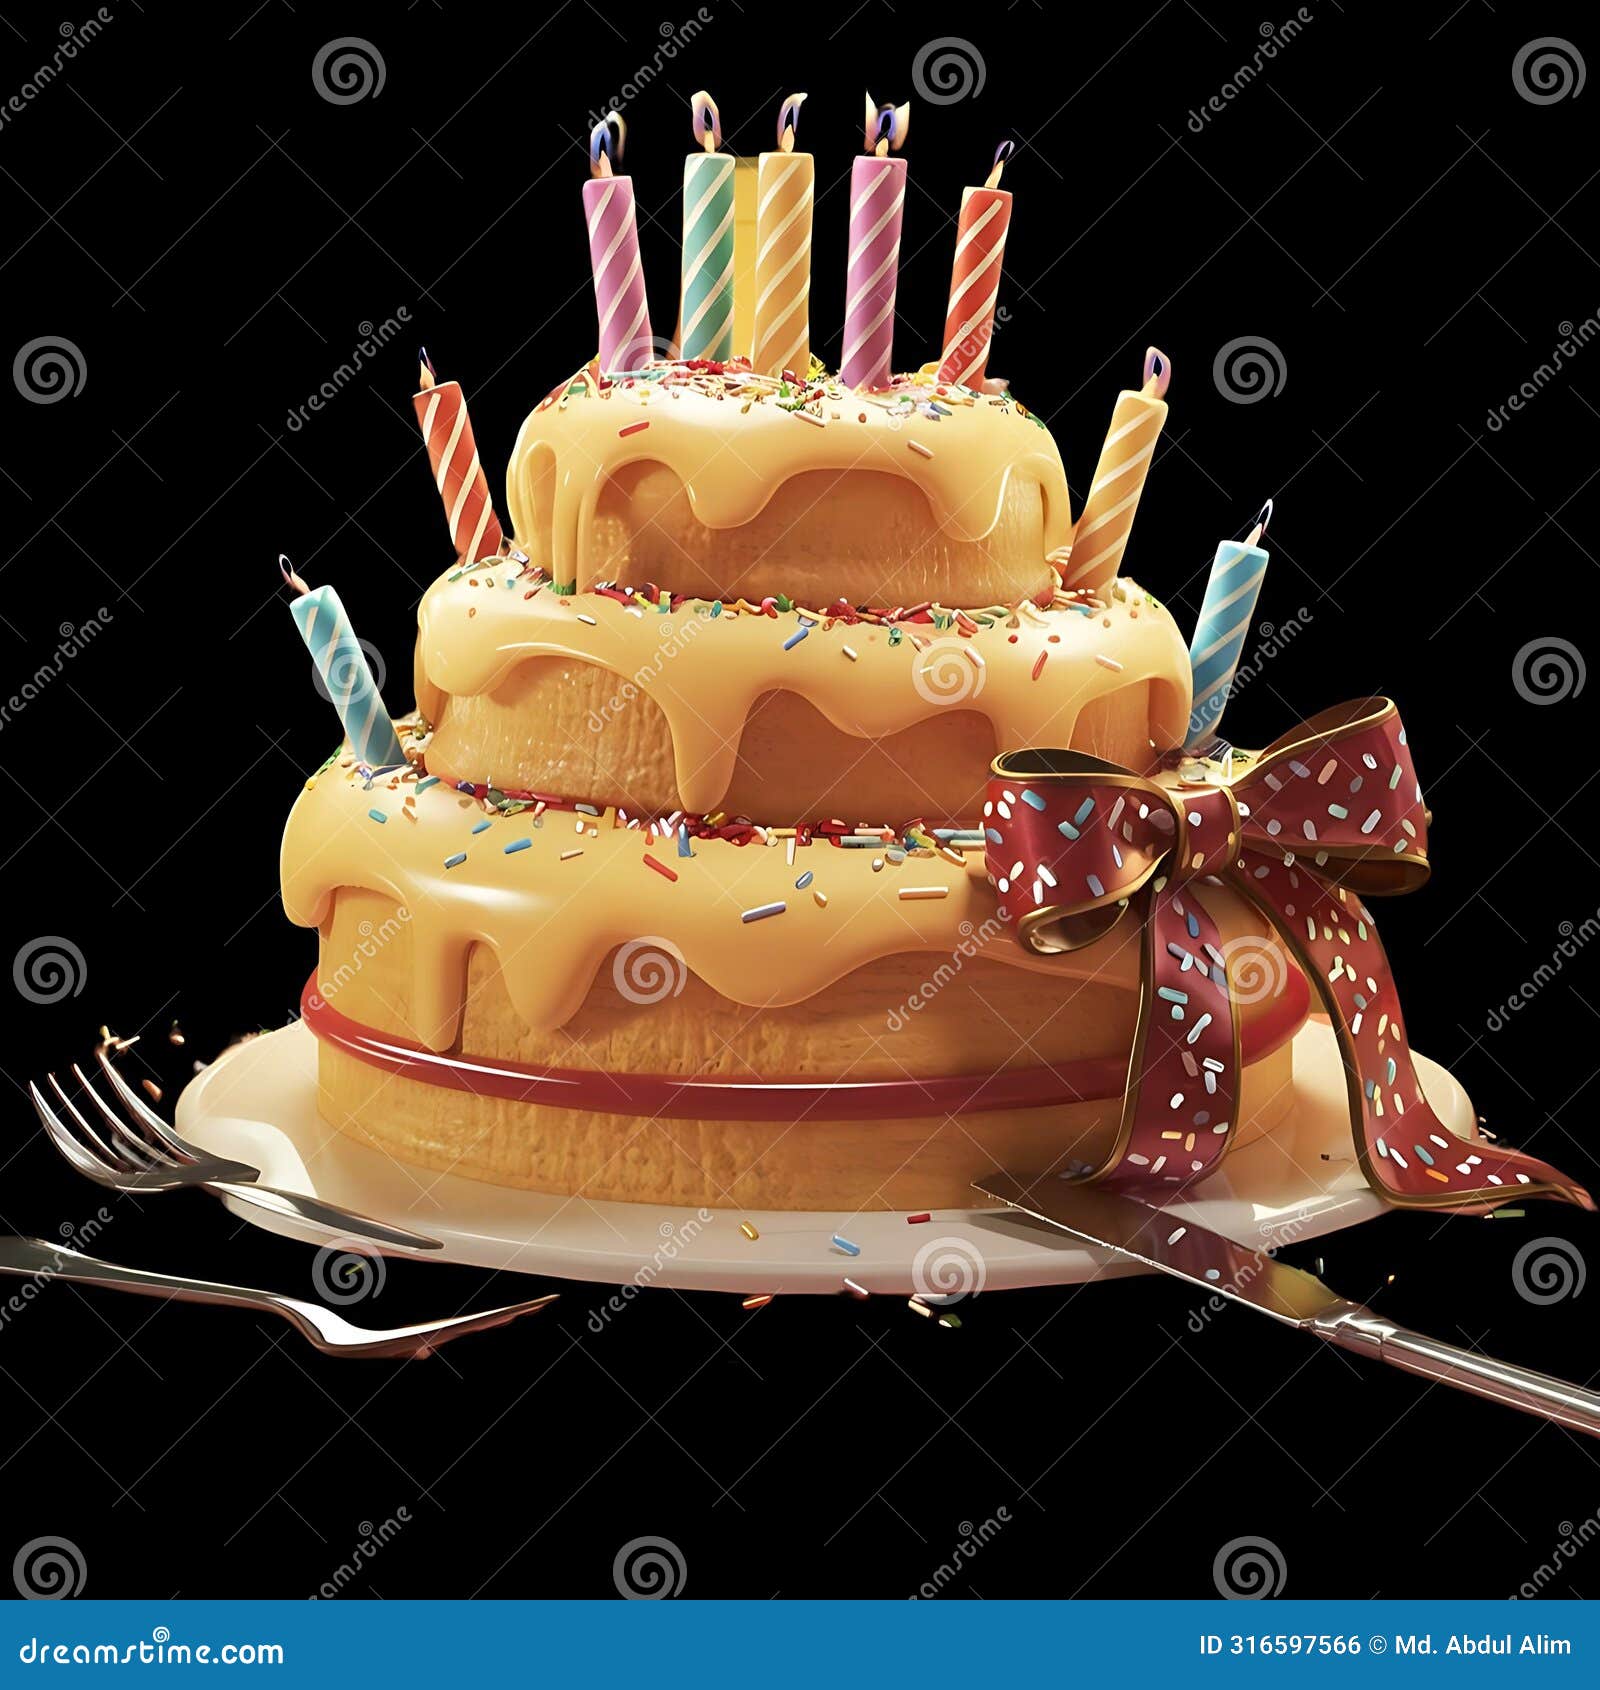 celebrating in style: a festive birthday cake delight